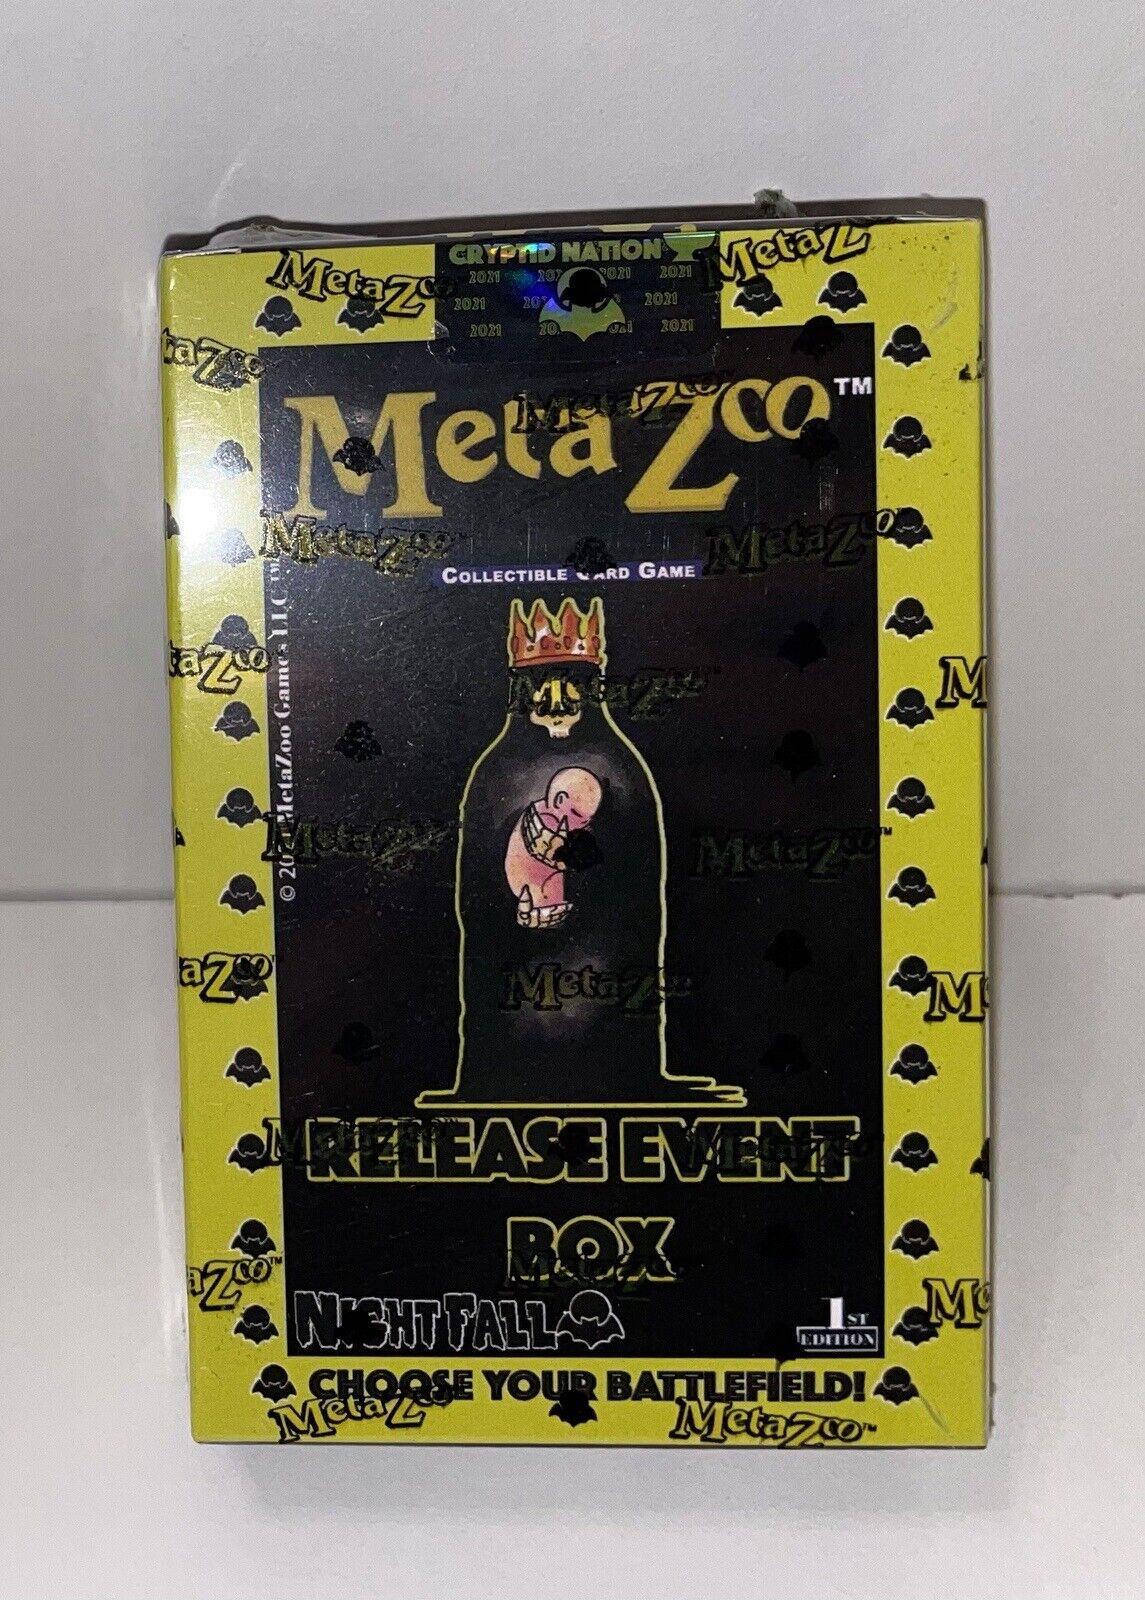 MetaZoo TCG: Nightfall 1st Edition Release Event Box English New Original Packaging Sealed